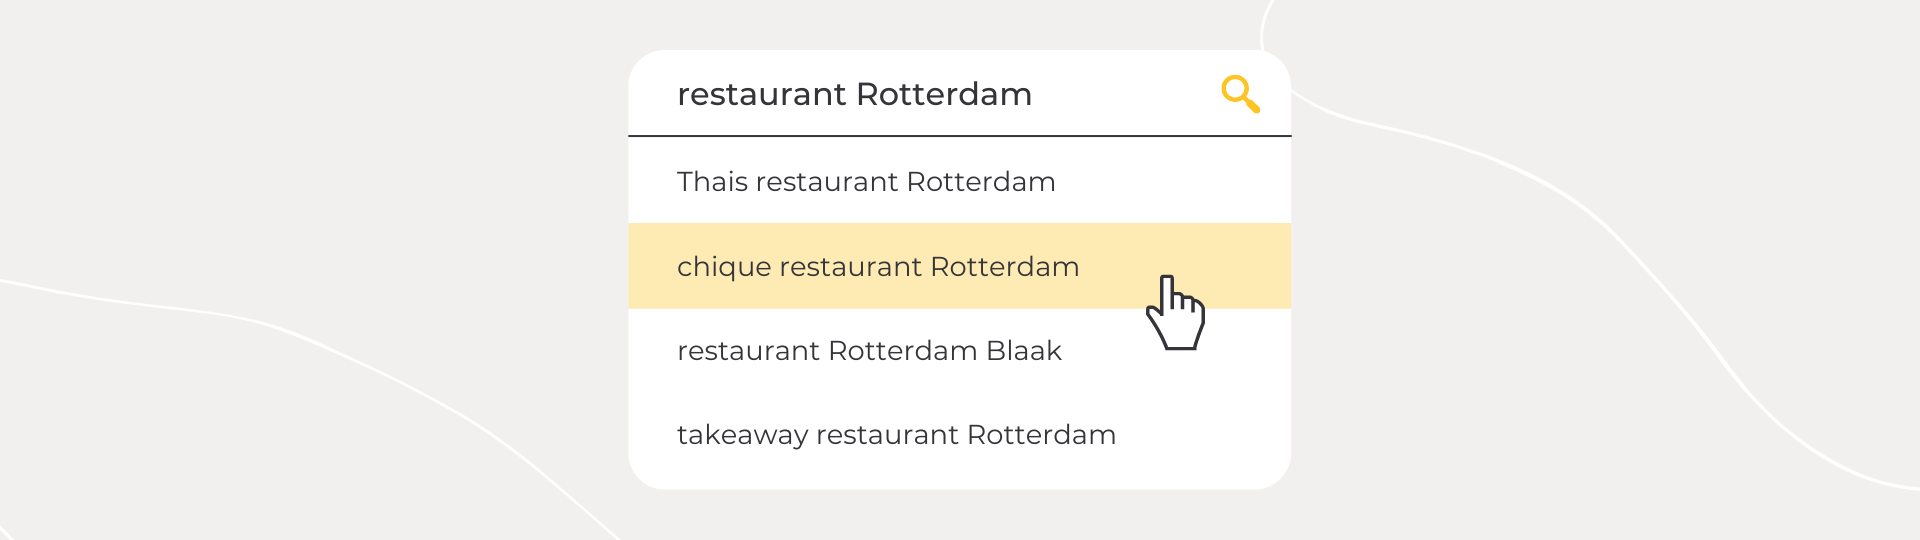 restaurant Rotterdam (1)